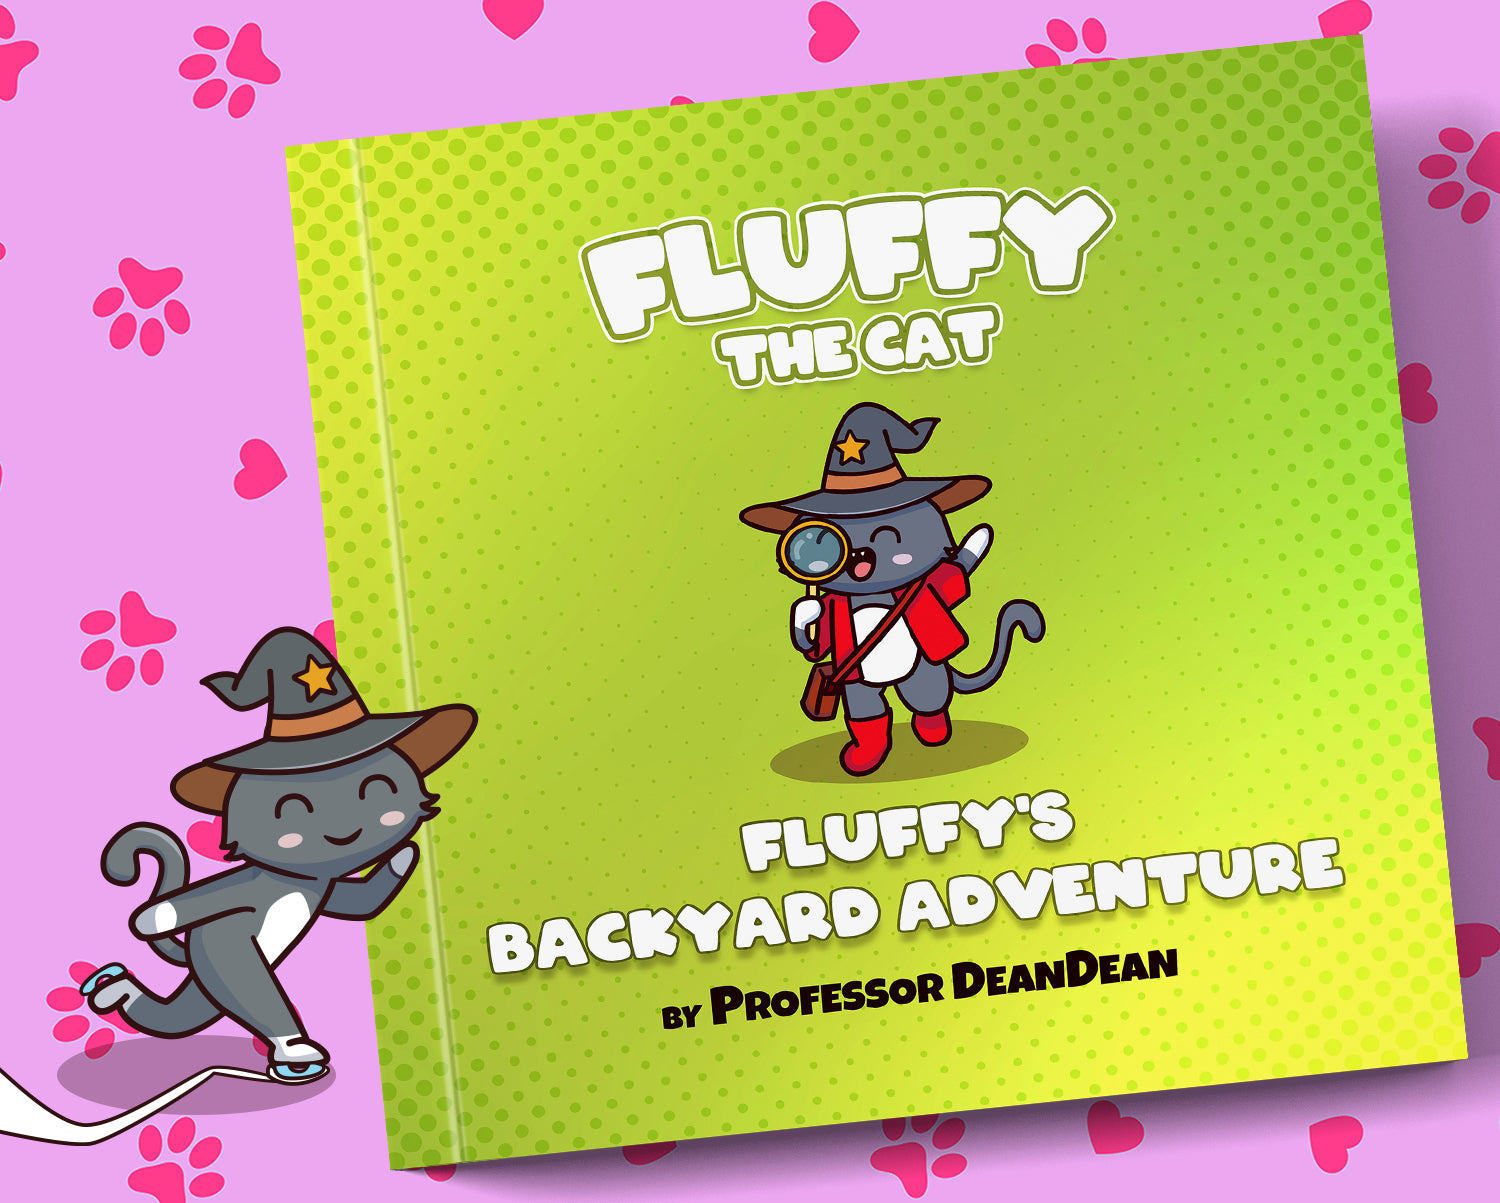 Fluffy’s Backyard Adventure